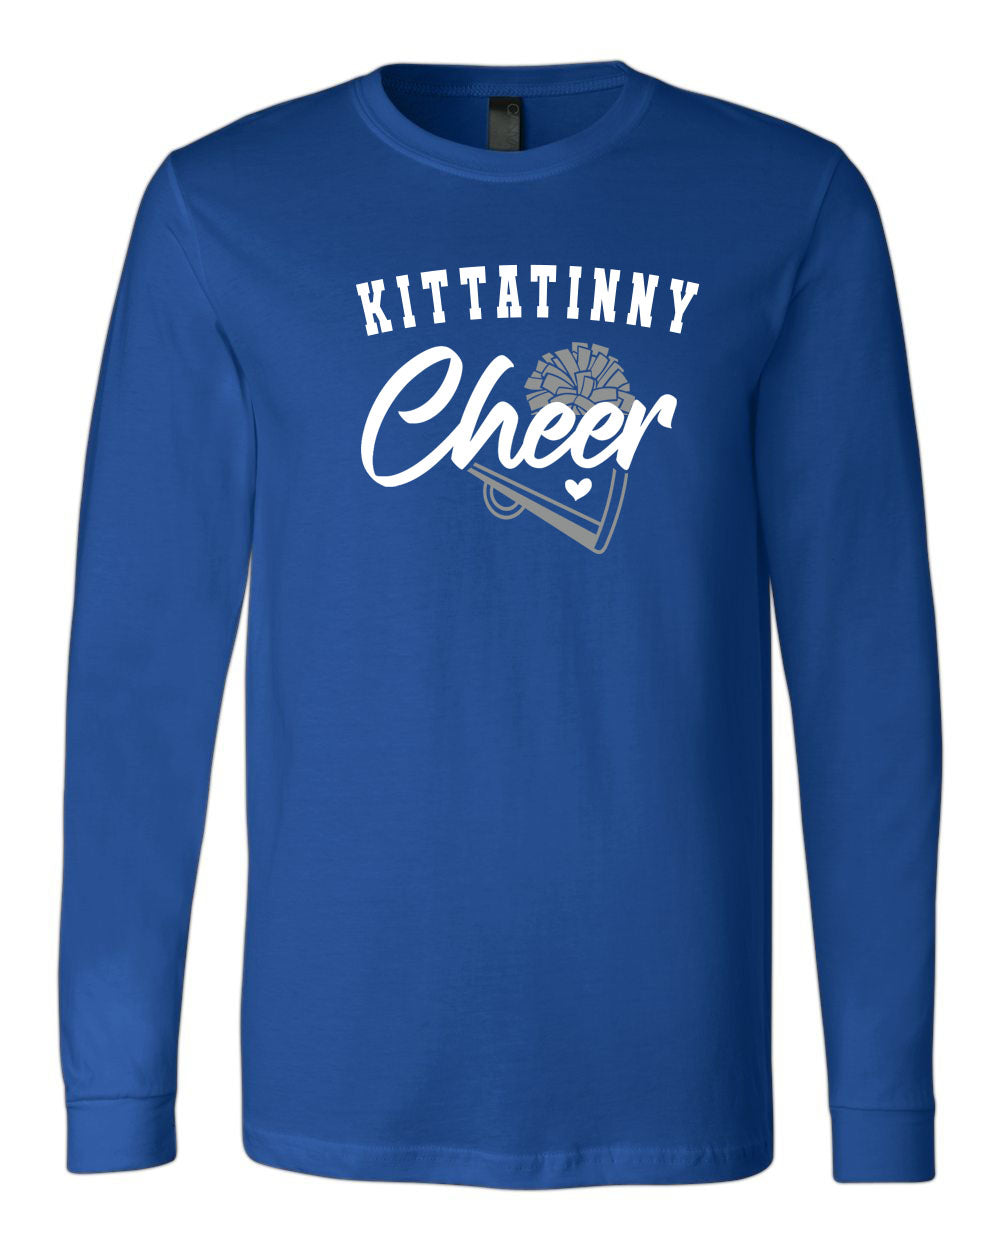 Kittatinny Cheer Design 9 Long Sleeve Shirt